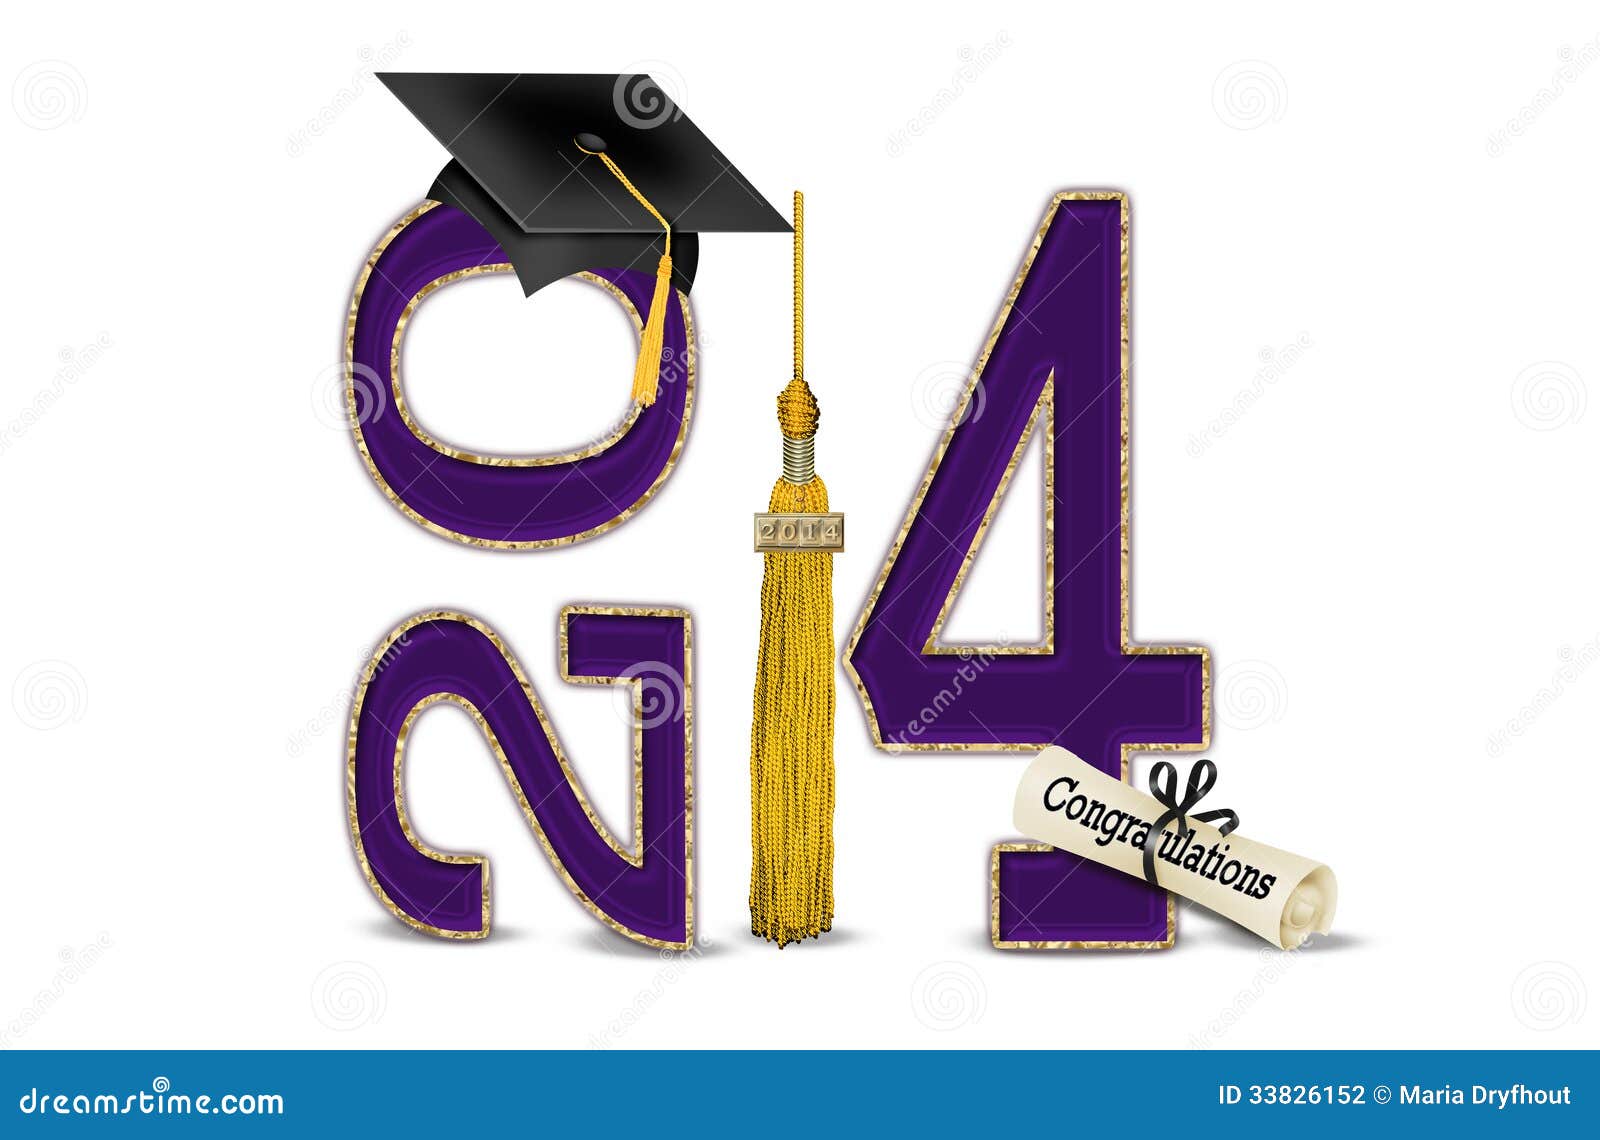 purple graduation cap clip art free - photo #46